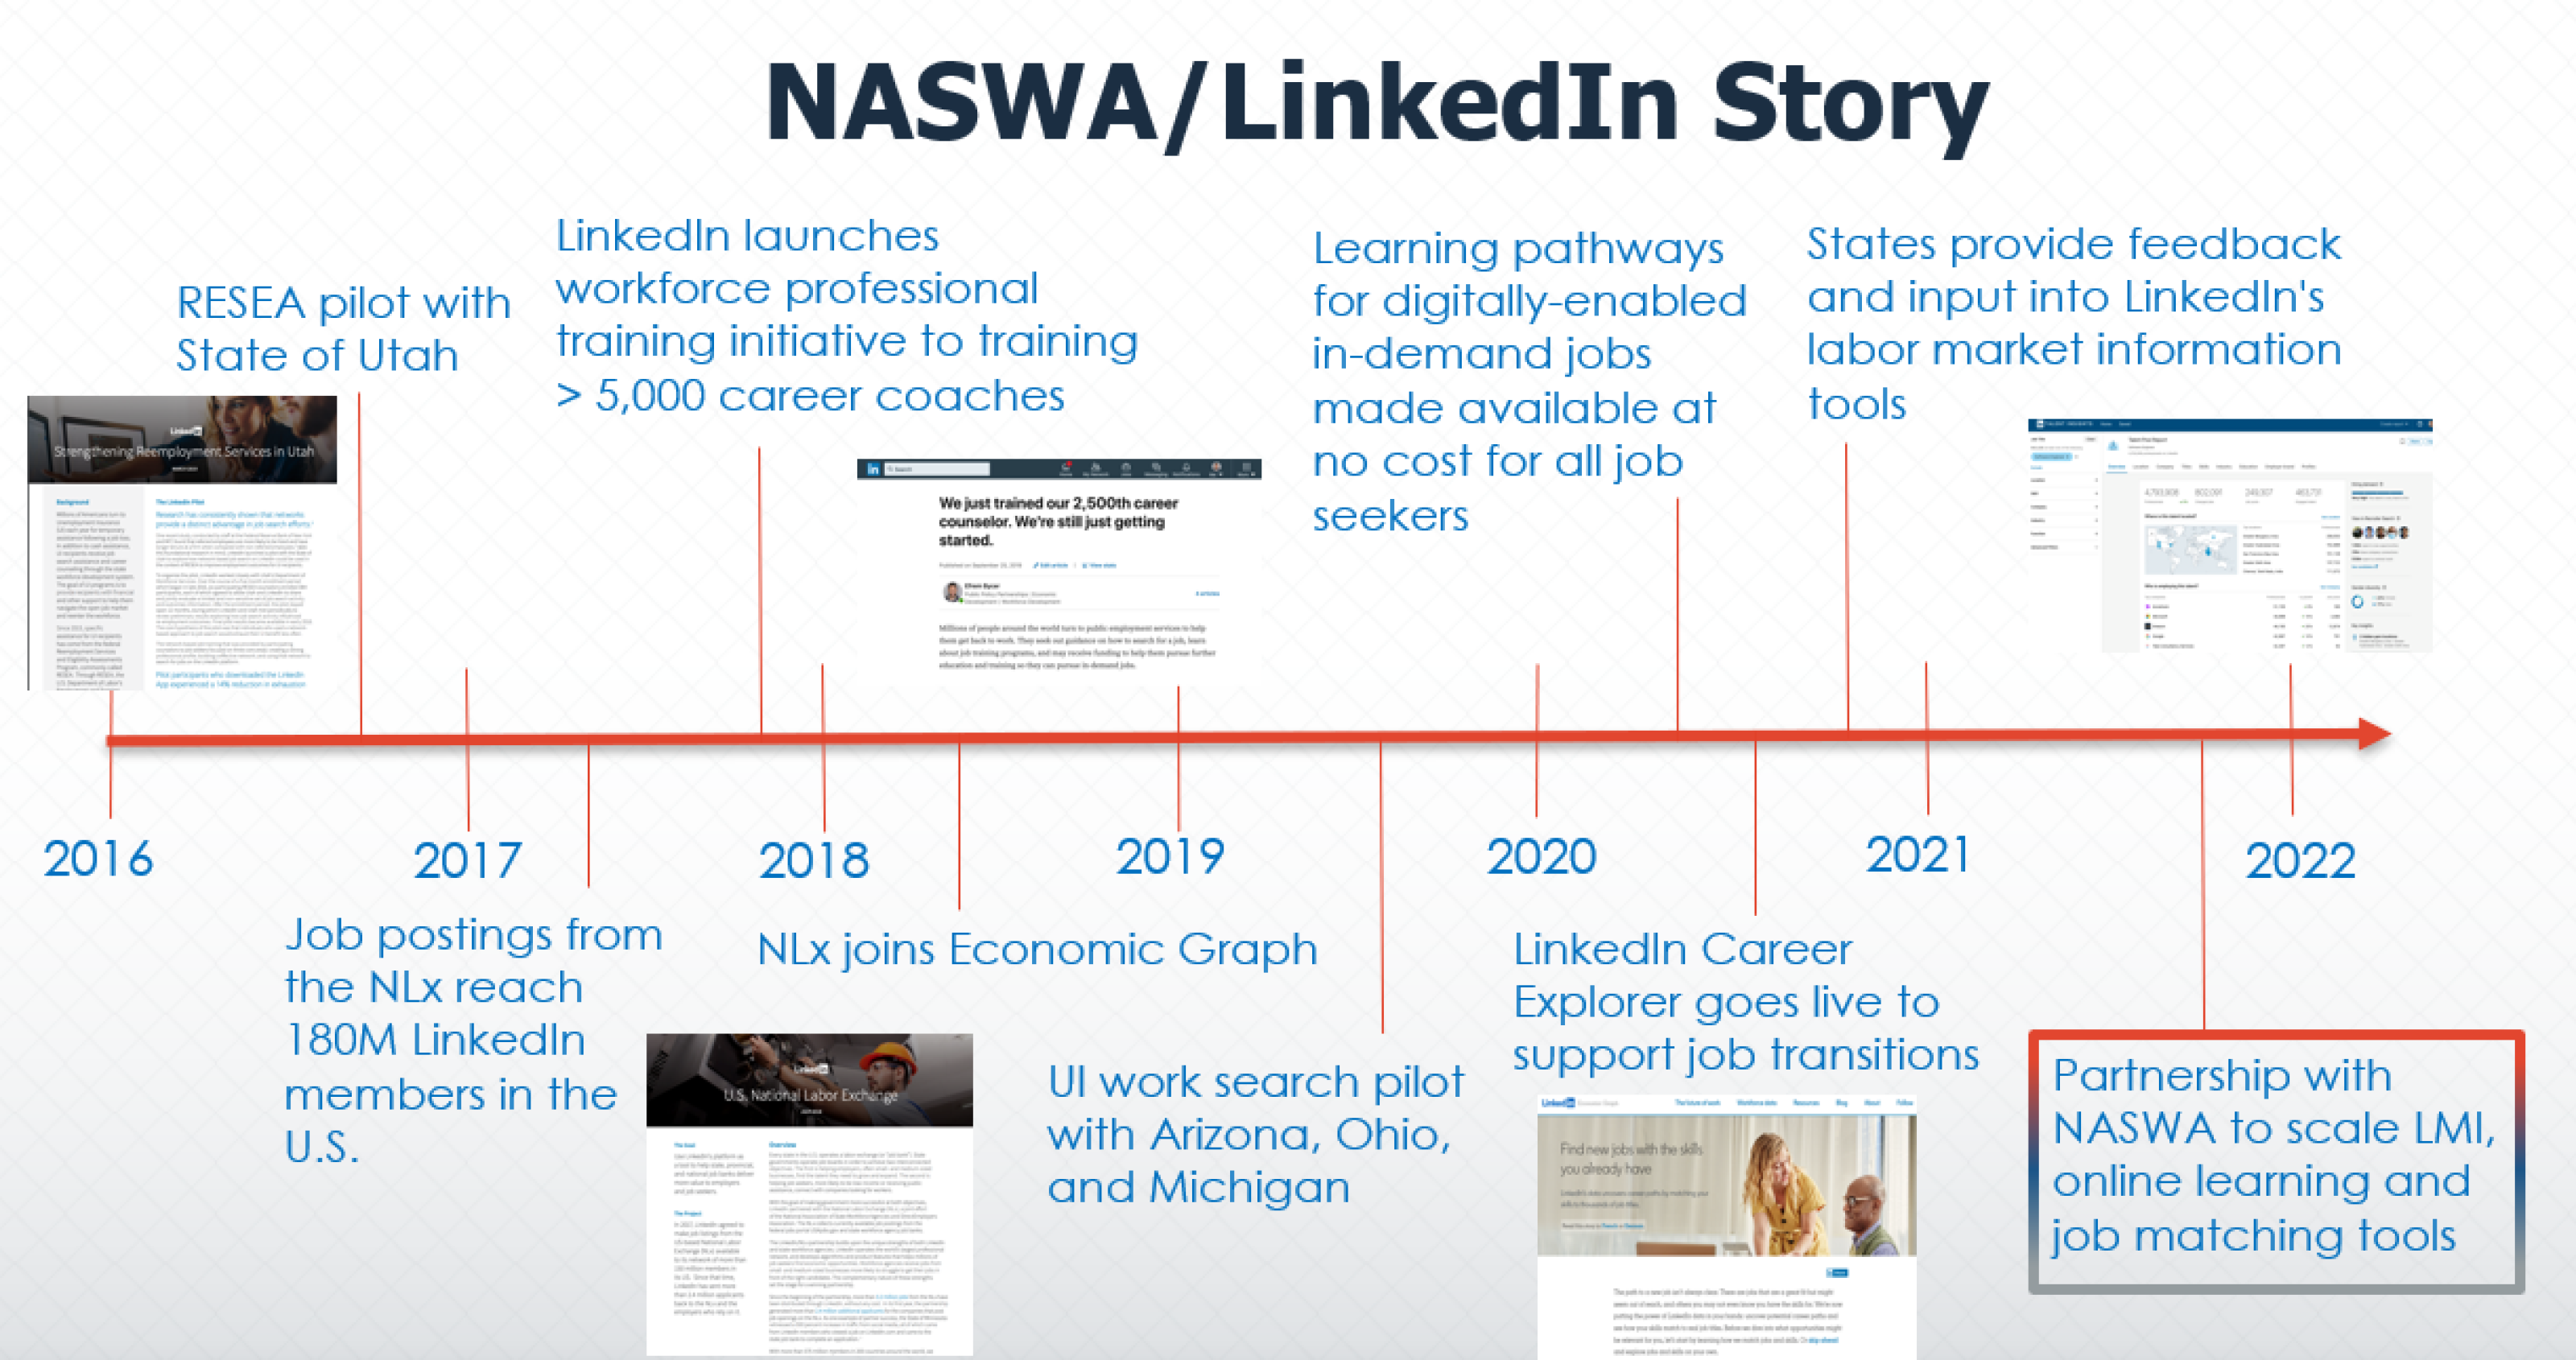 NASWA_LinkedIn_Partnership Story